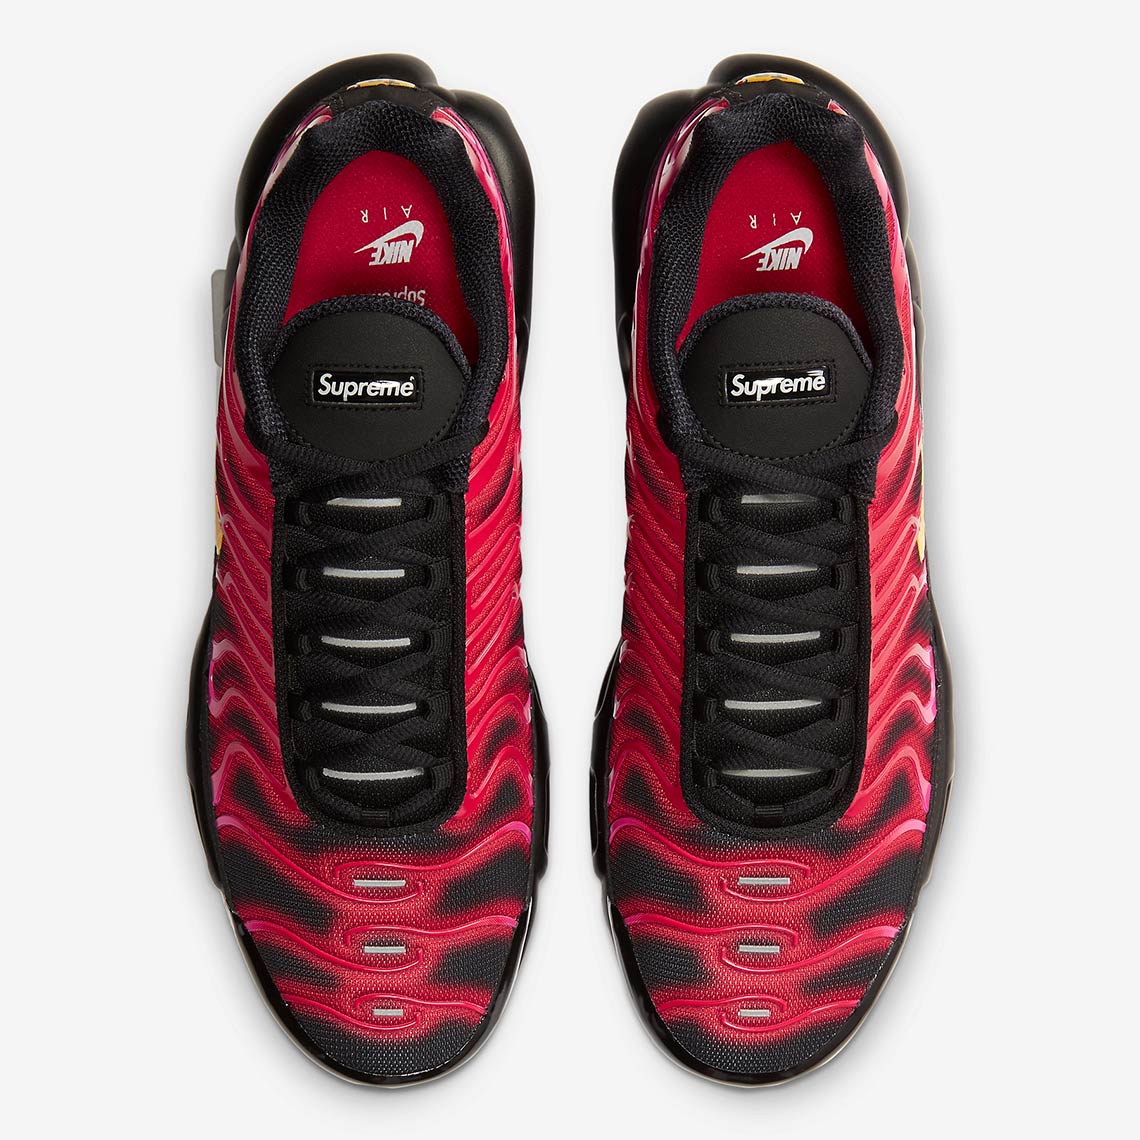 The Supreme x Nike Air Max Plus Drops This Week! - Sneaker Freaker